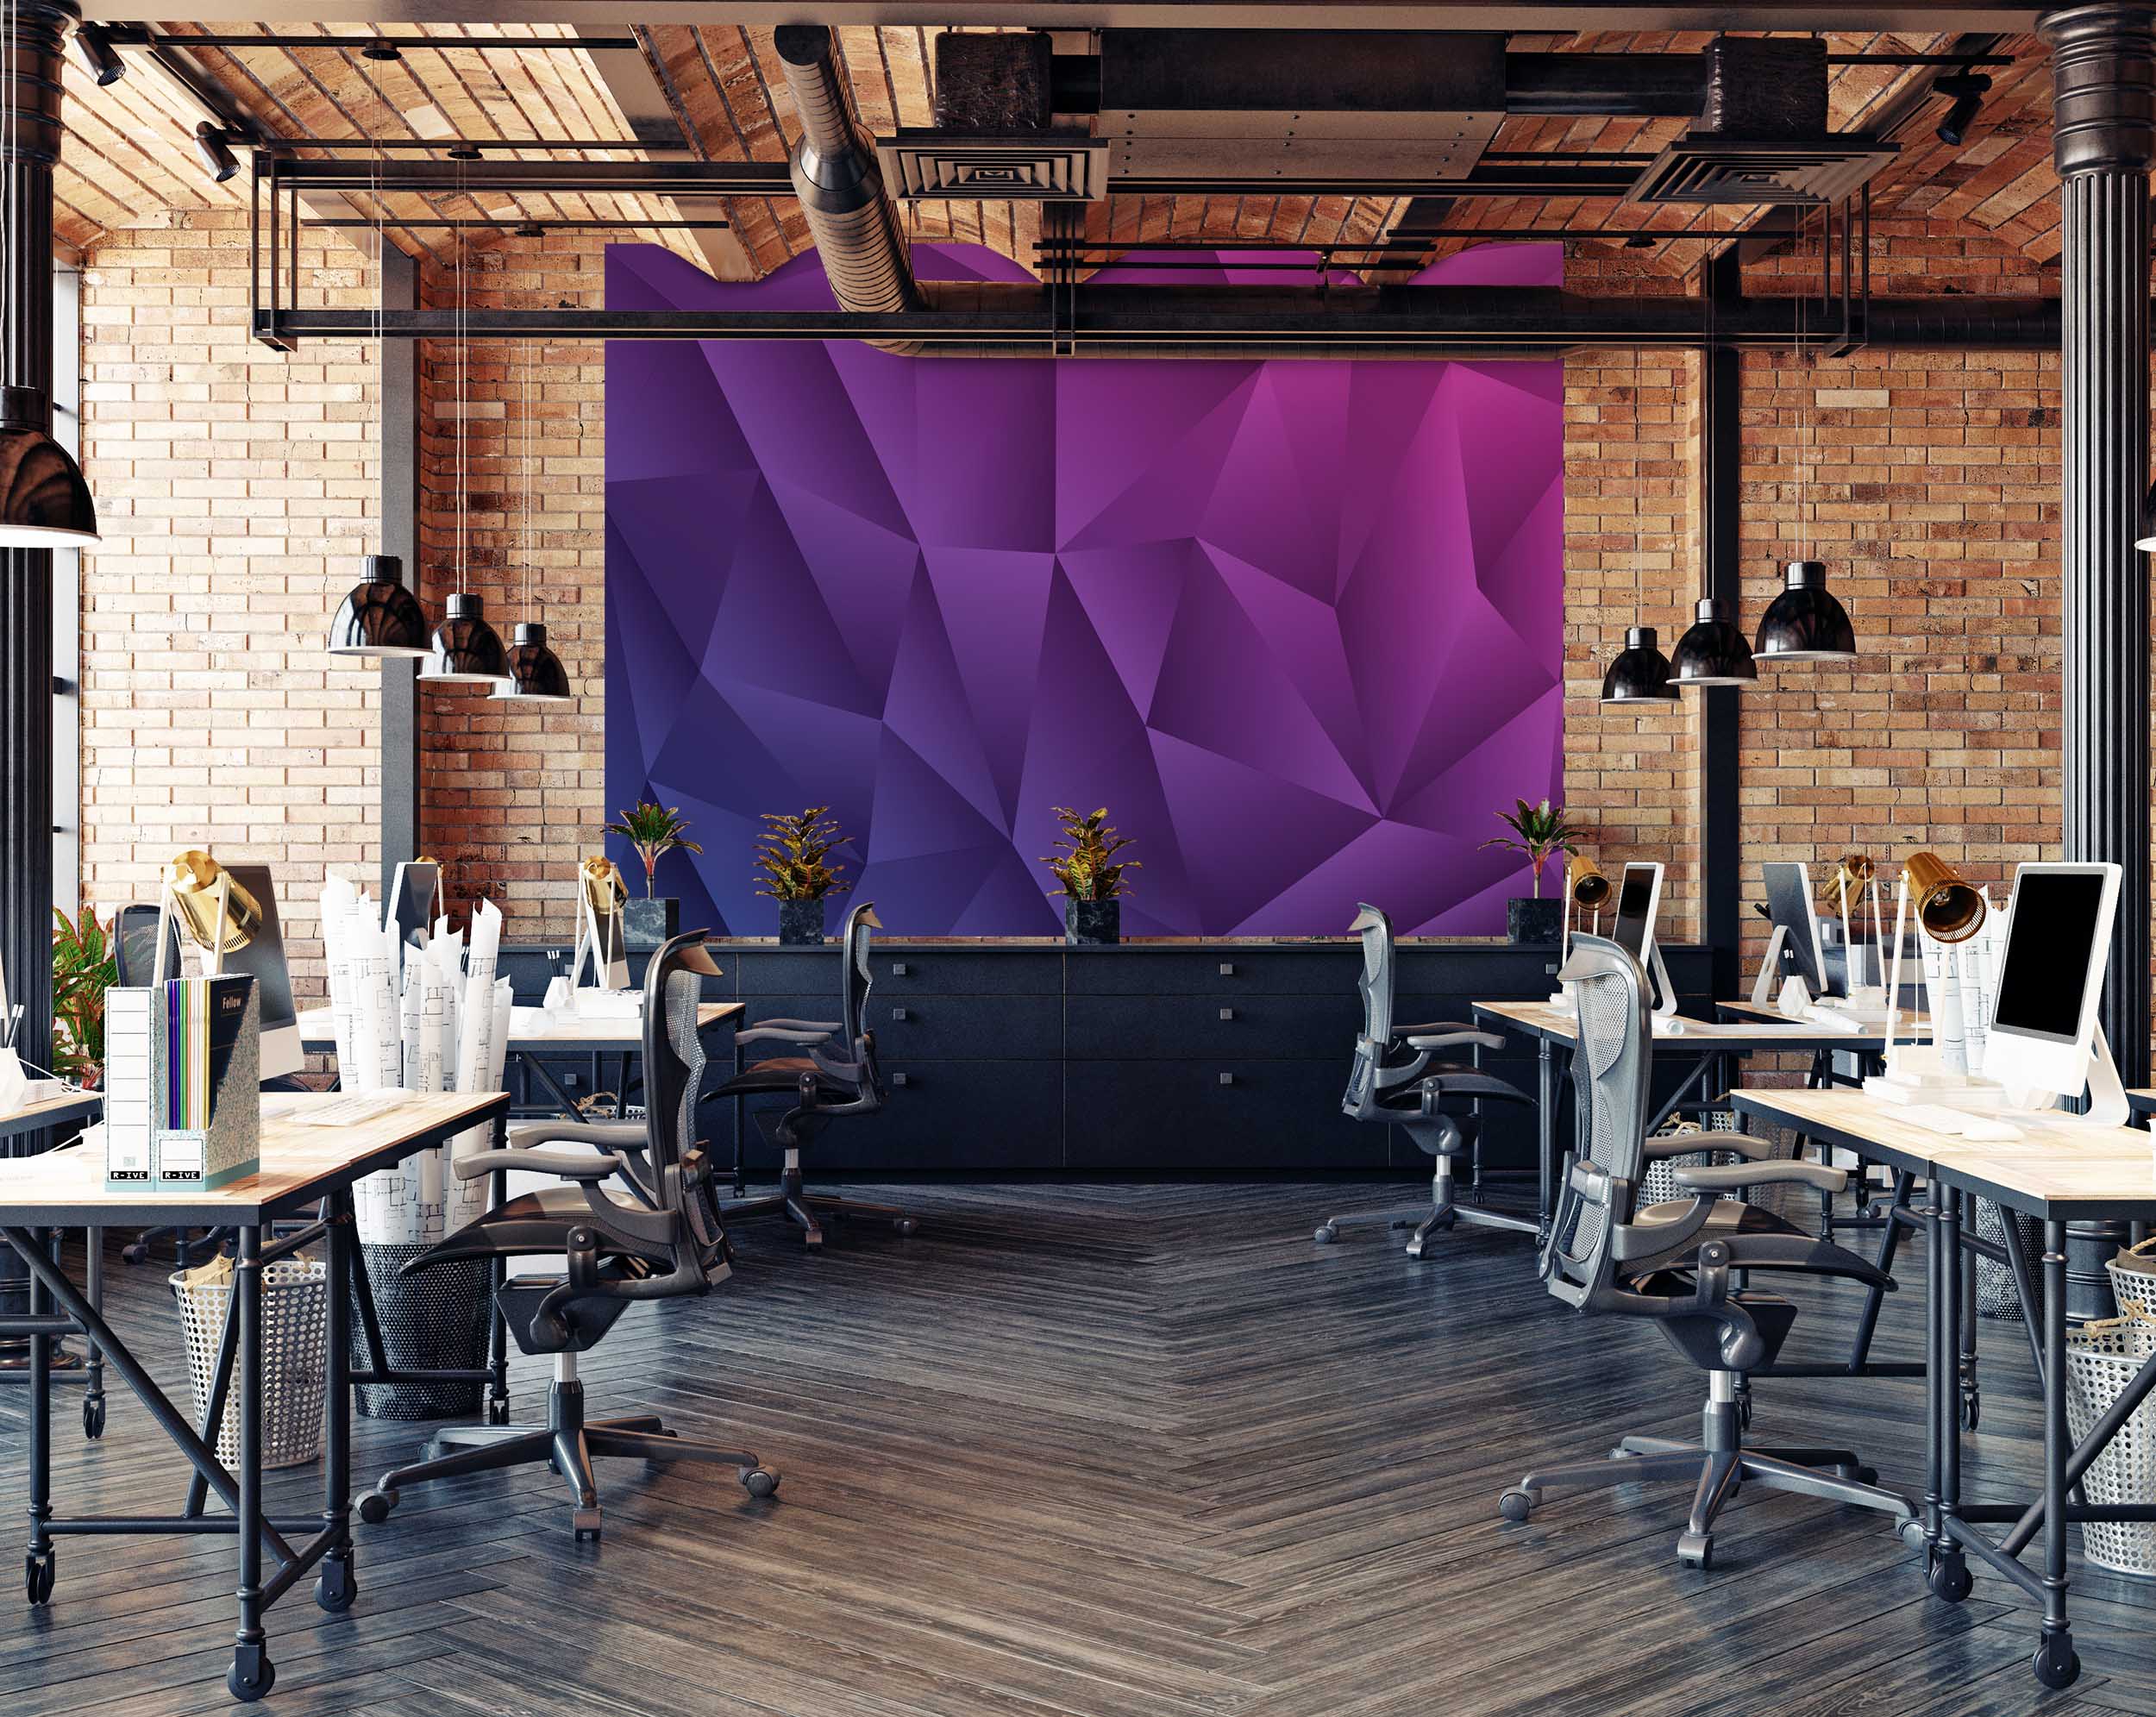 Tapeta 3D fialové trojúhelníky Vel (šířka x výška): 216 x 140 cm